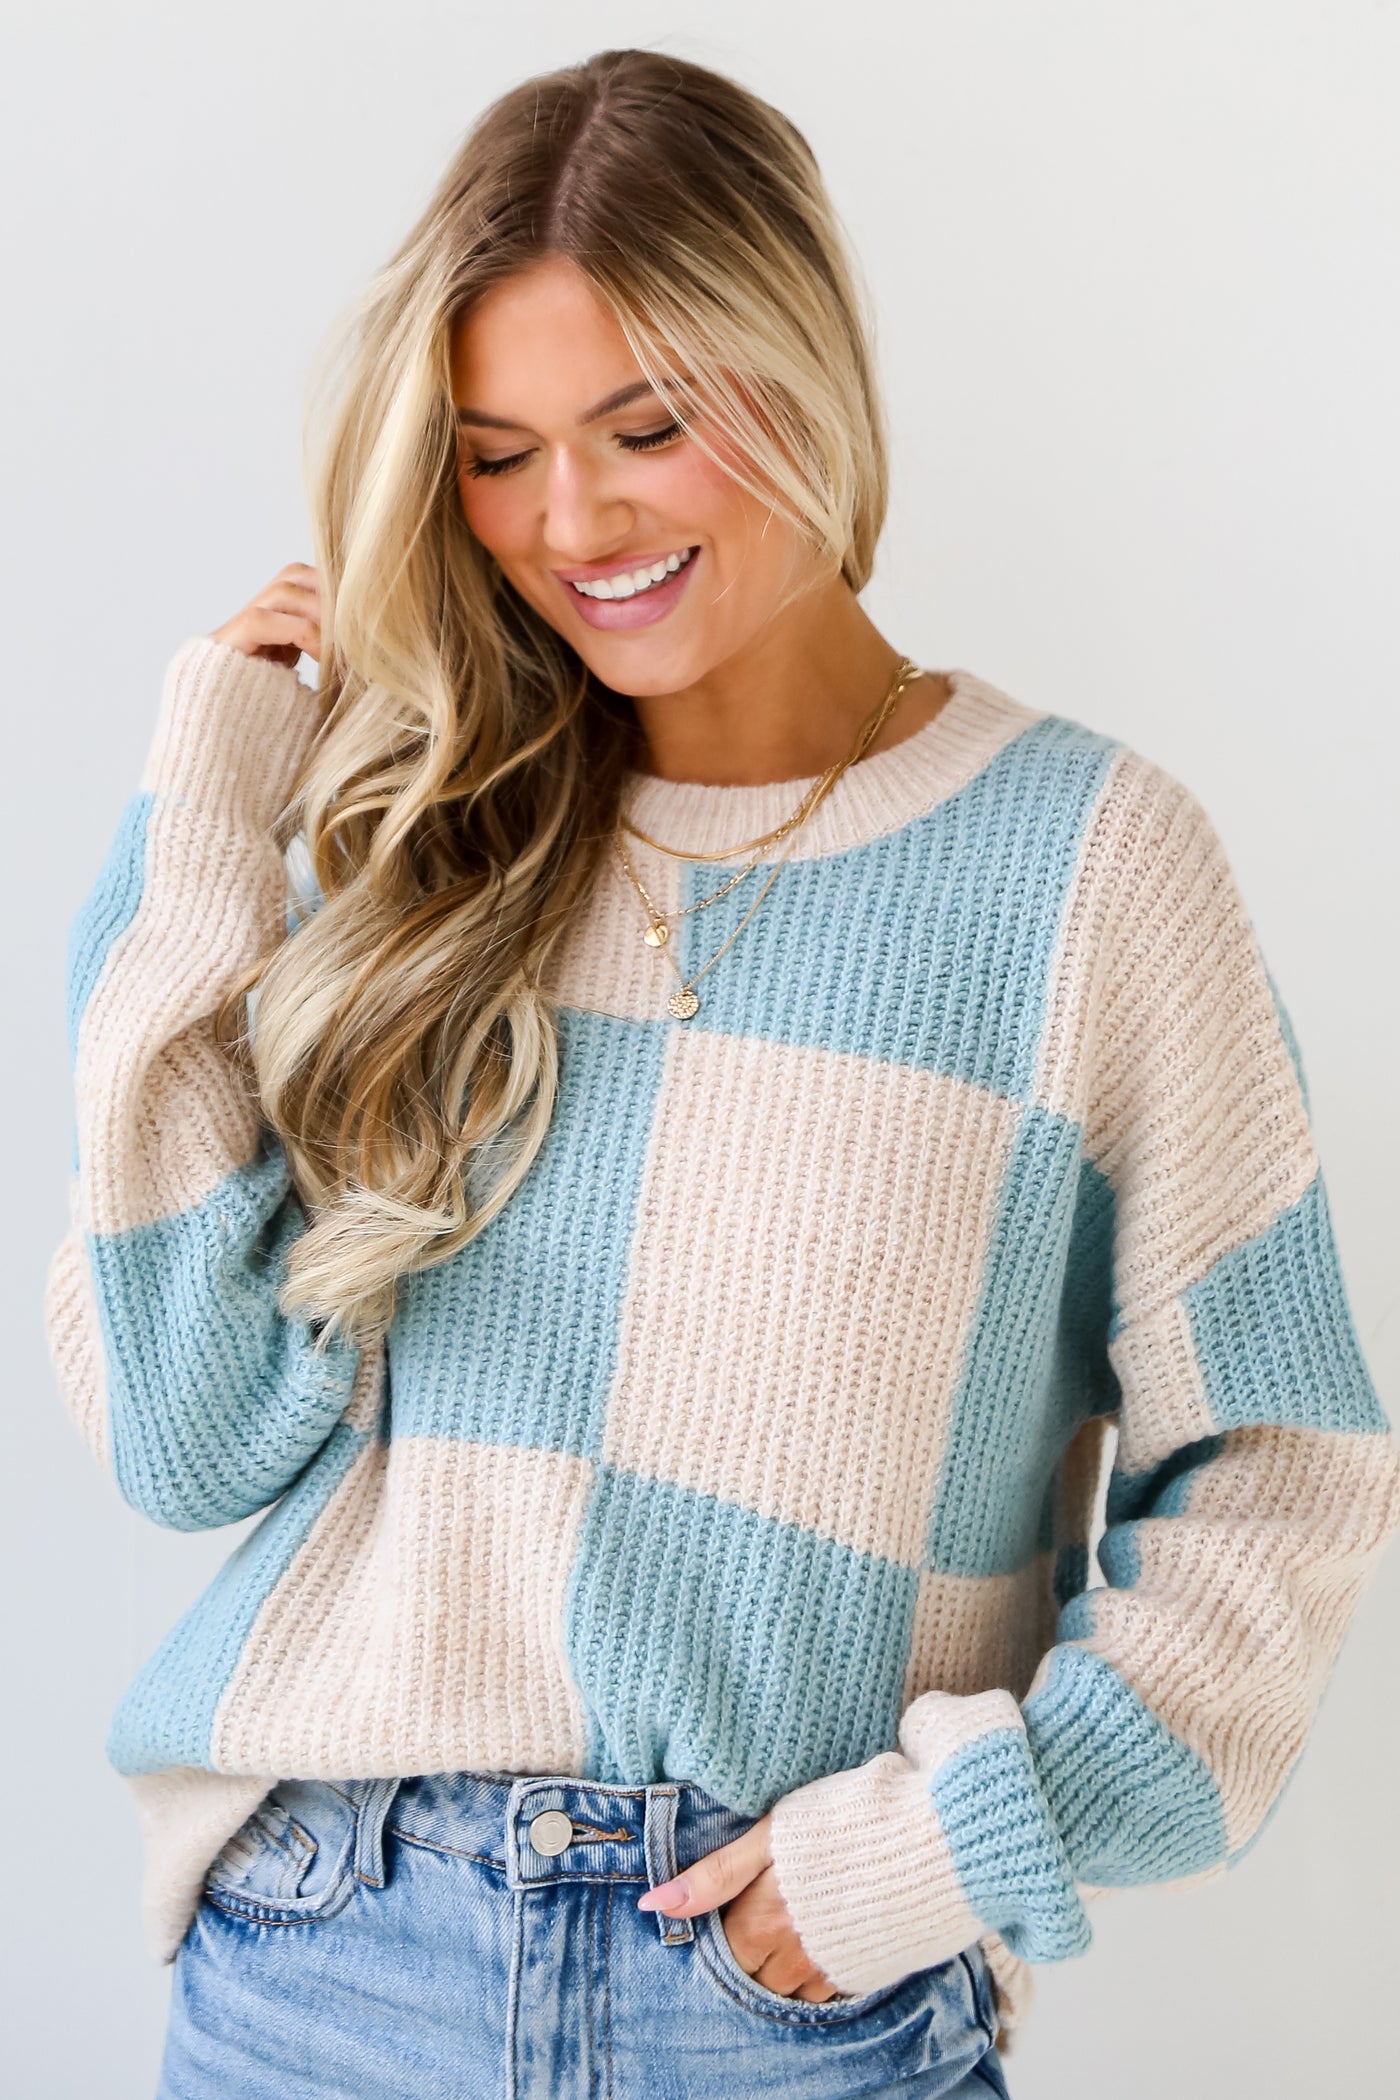 cute Light Blue Checkered Sweater for women